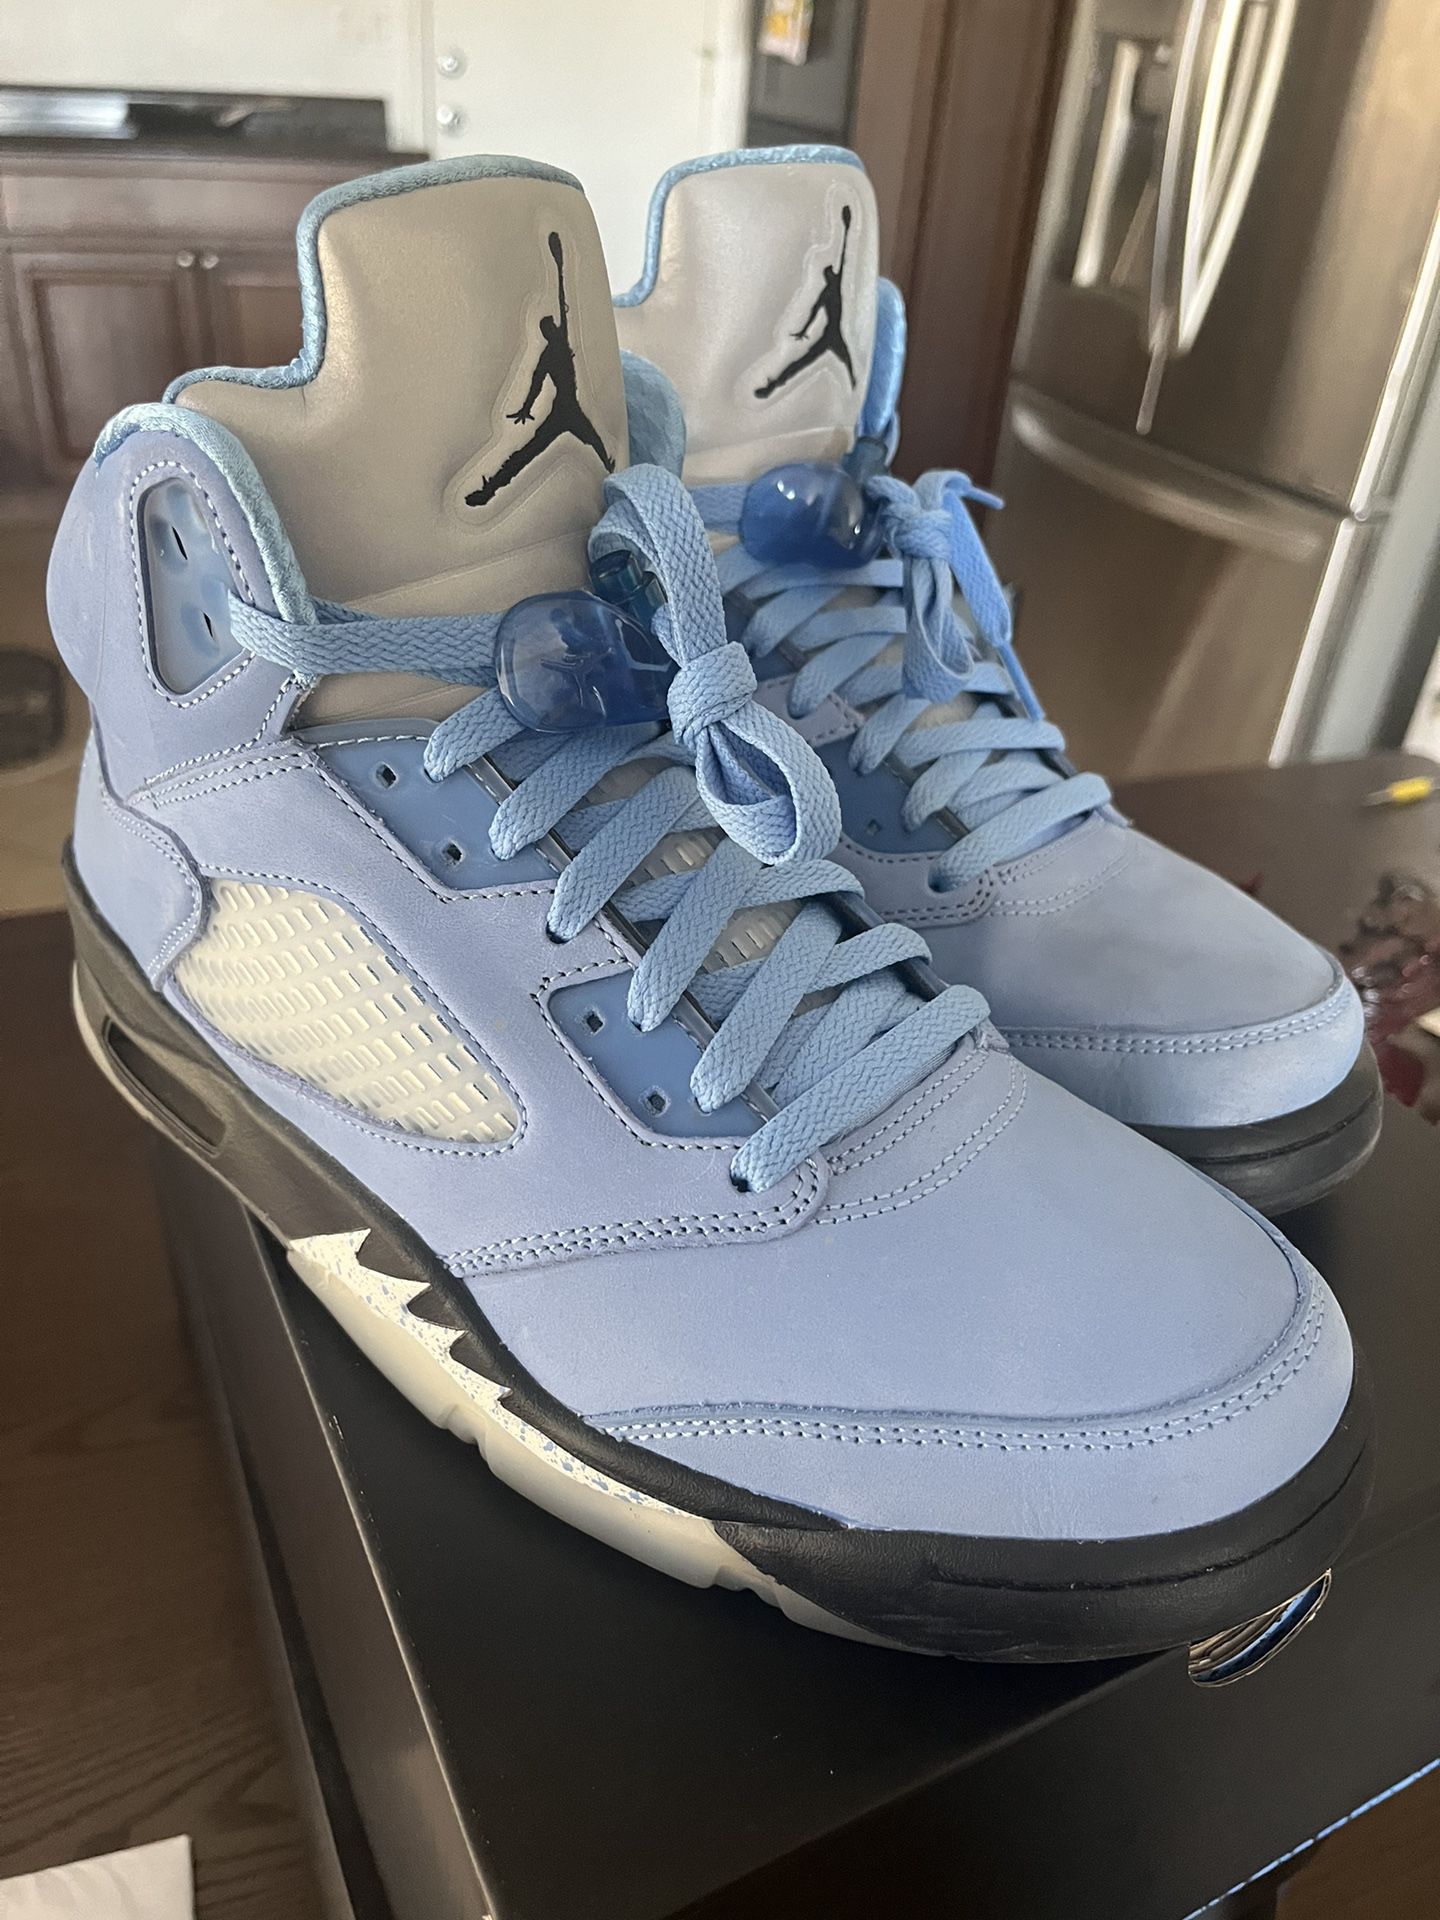 Air Jordan 5 Size 10 